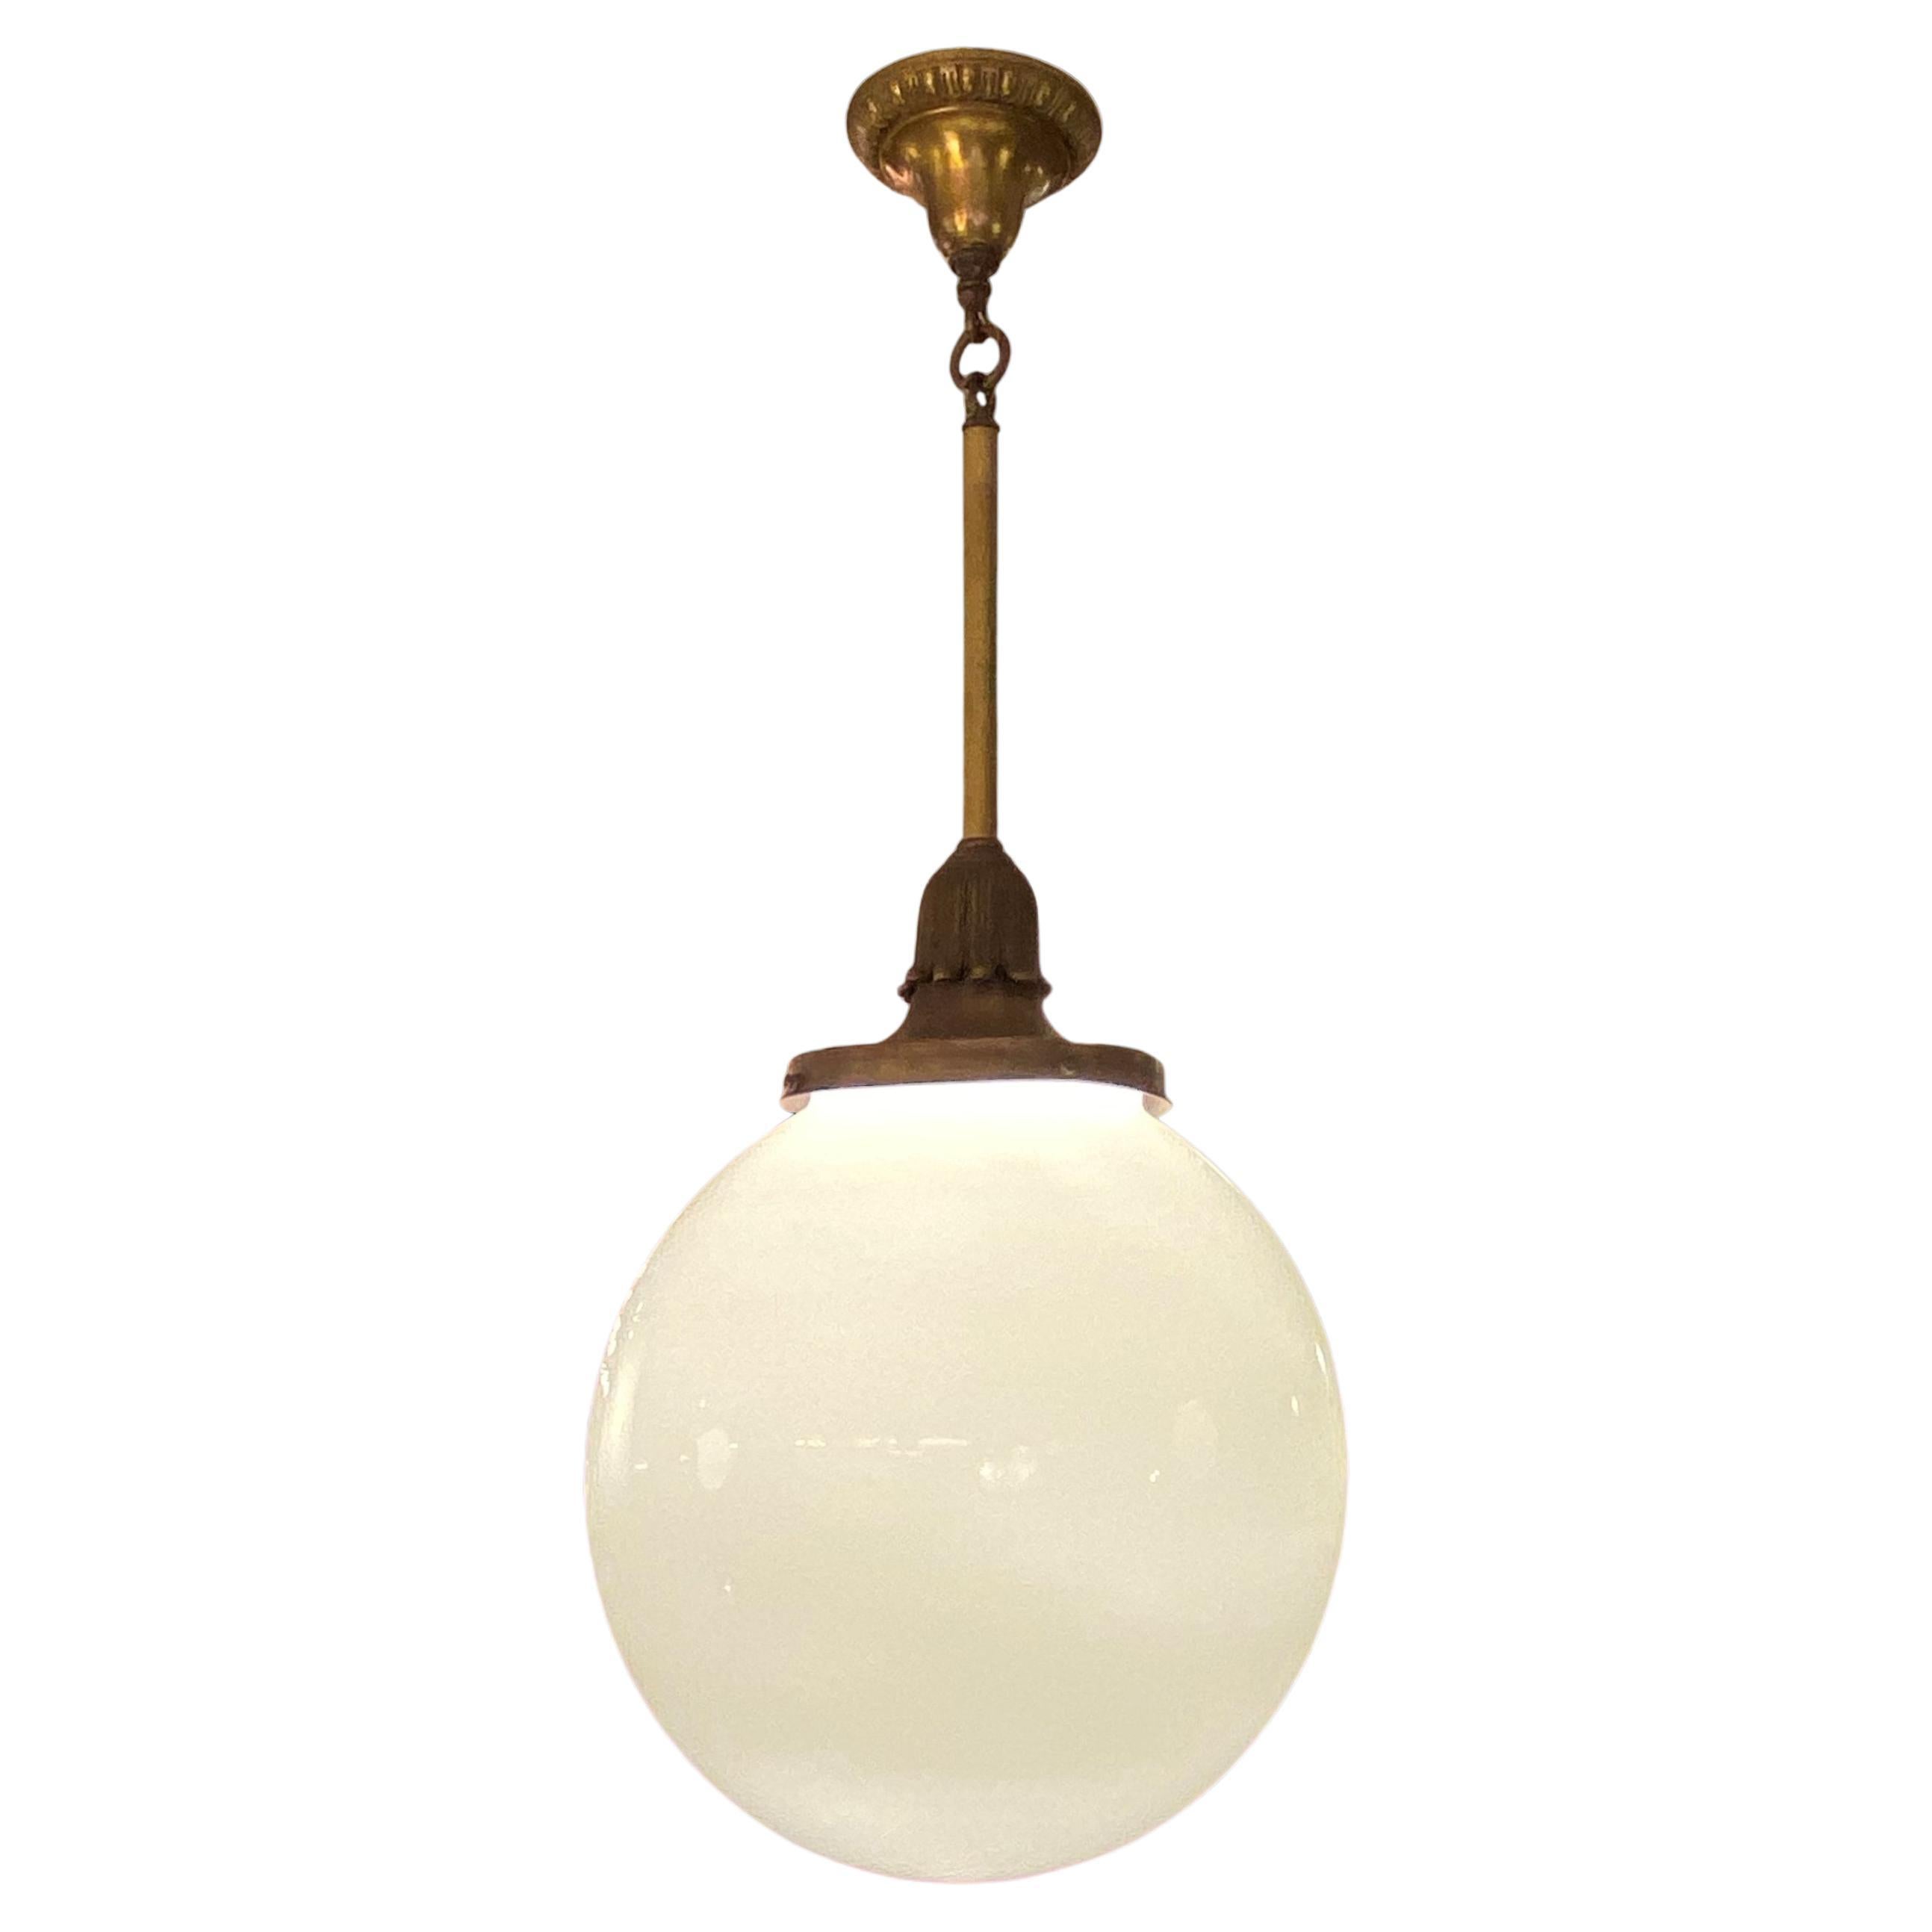 Opaline Ball Globe Ornate Brass & Bronze Pendant Light For Sale